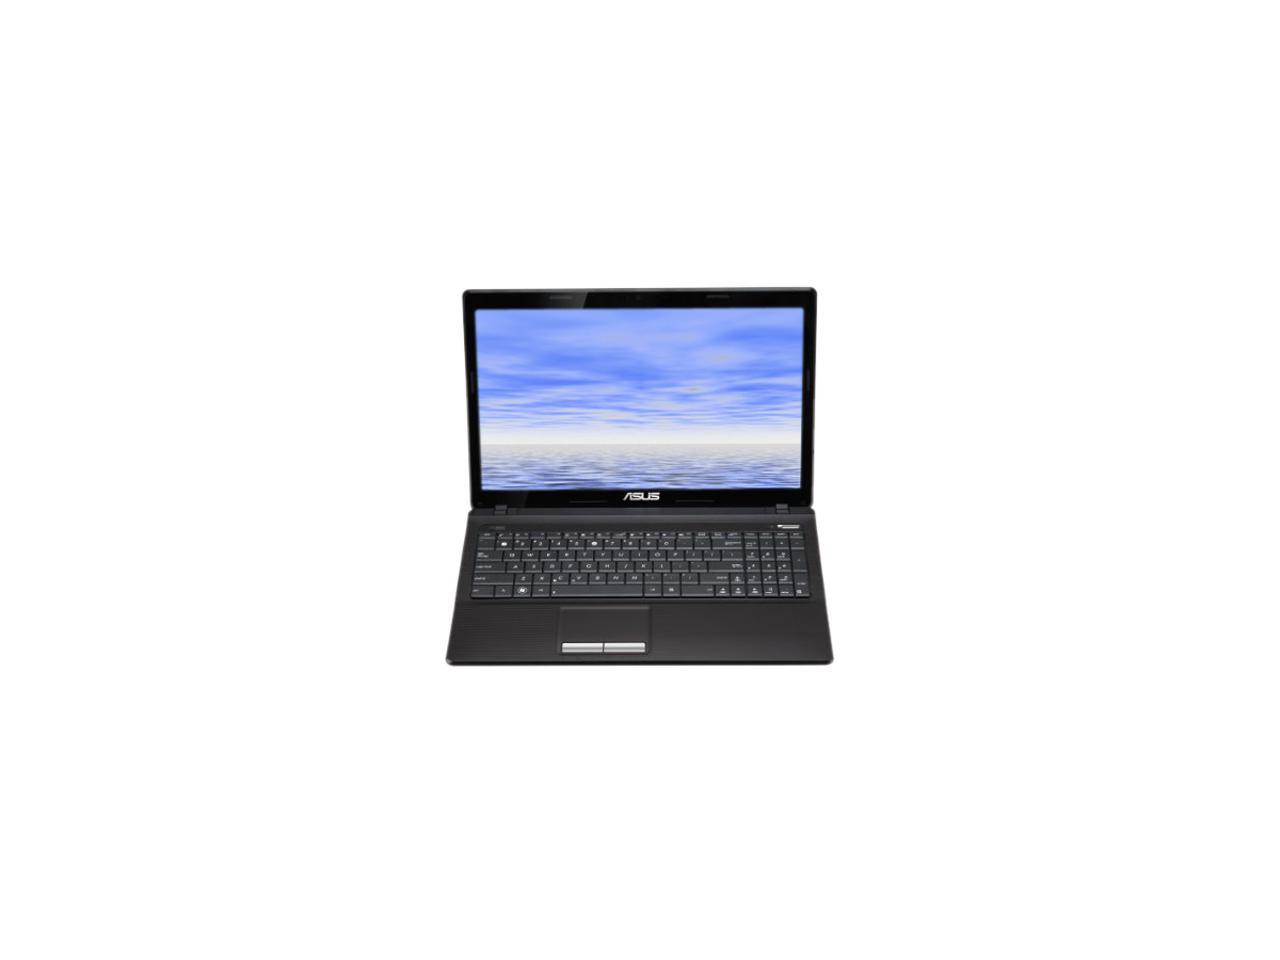 ASUS Laptop K53 Series AMD Dual-Core Processor E-350 (1.6GHz) 4GB 